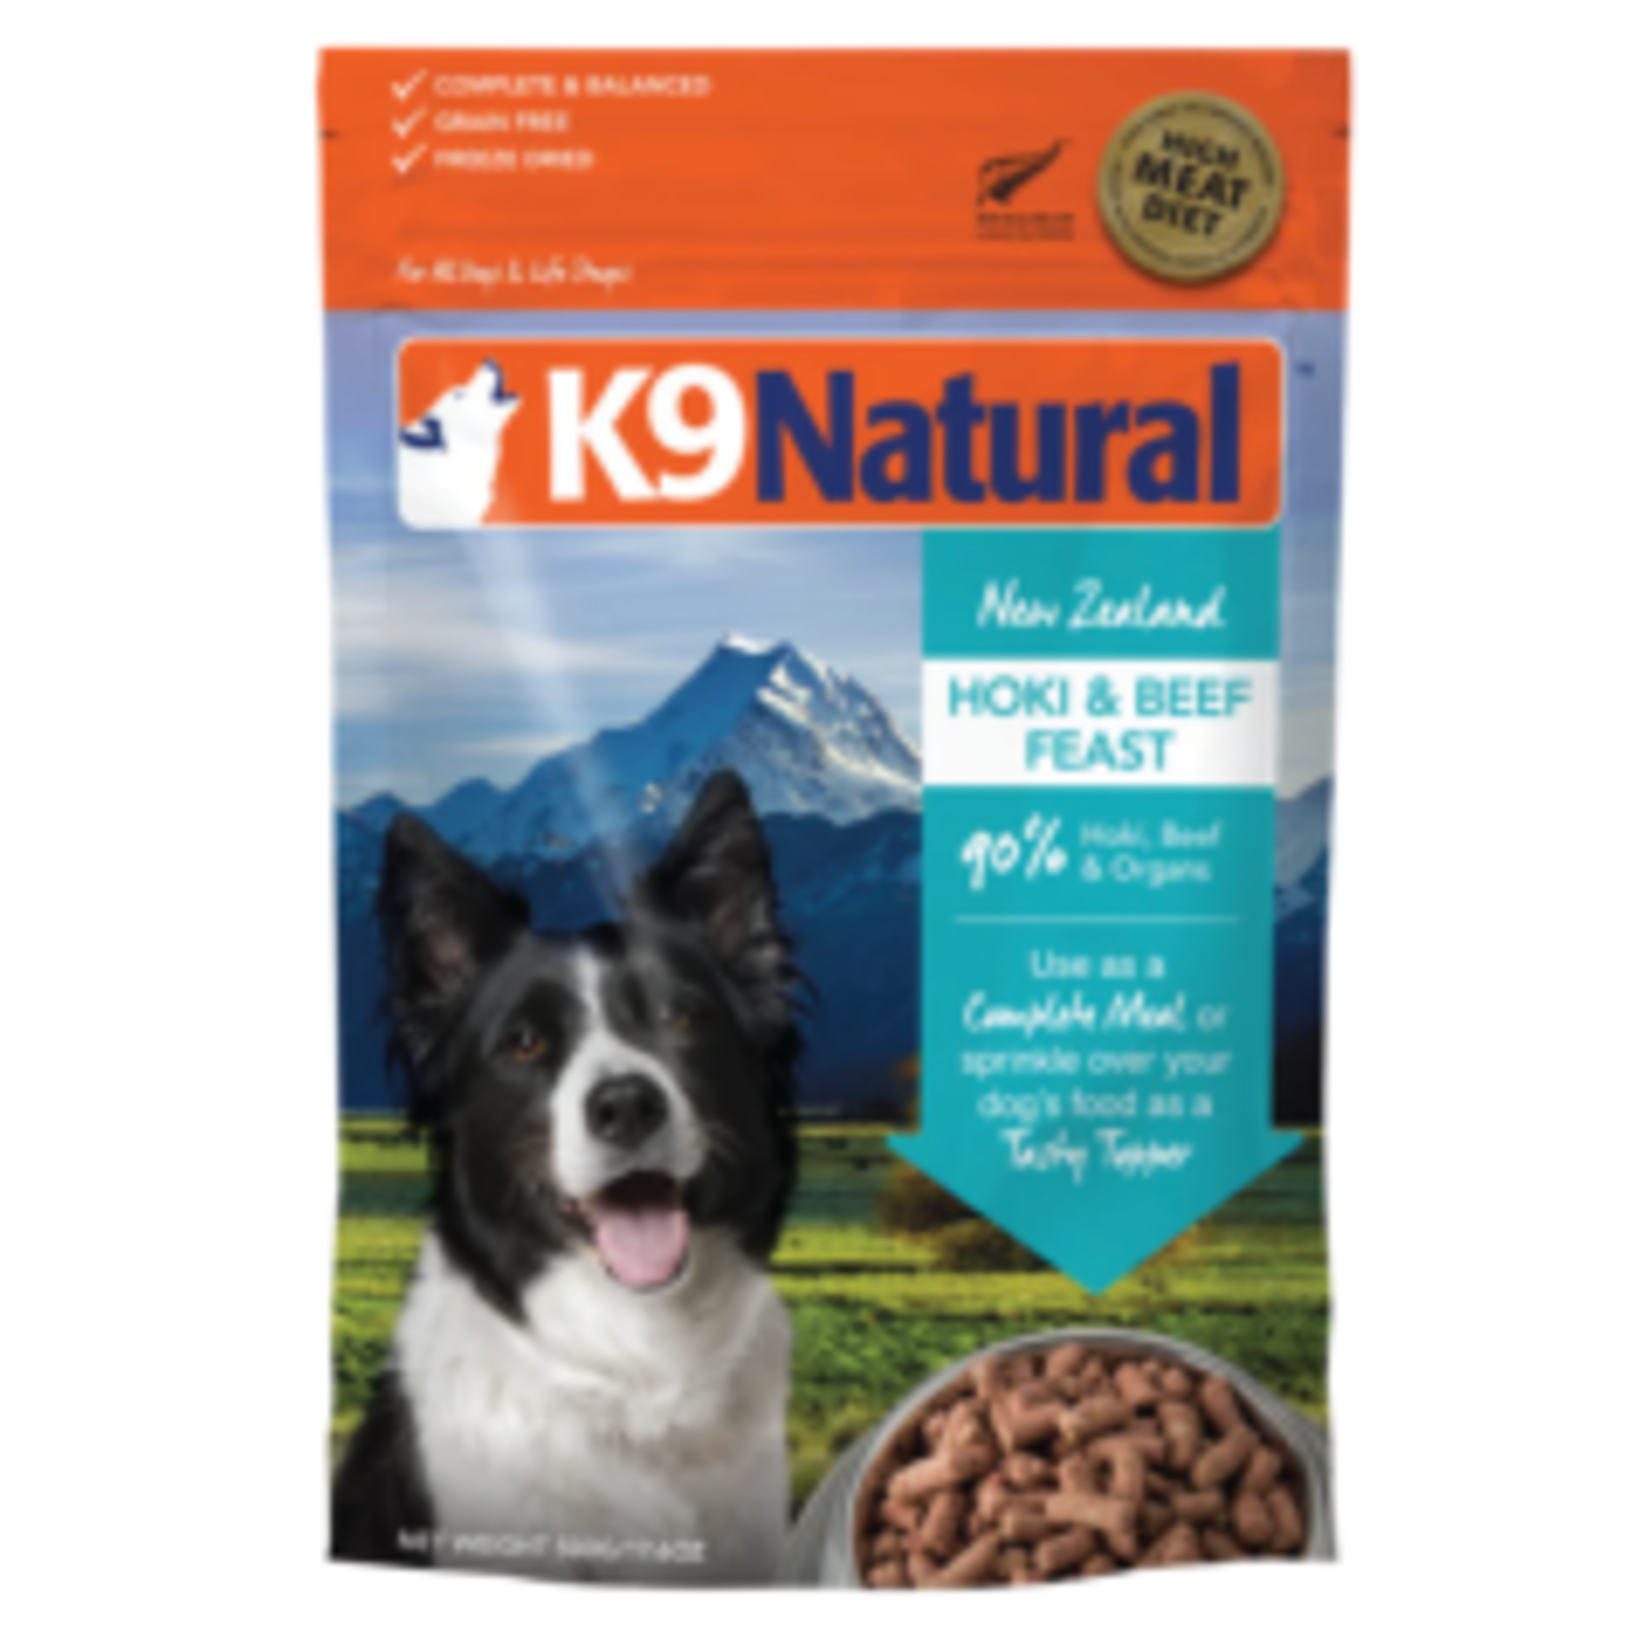 K9 Natural K9 Natural: Freeze-Dried Hoki & Beef Feast